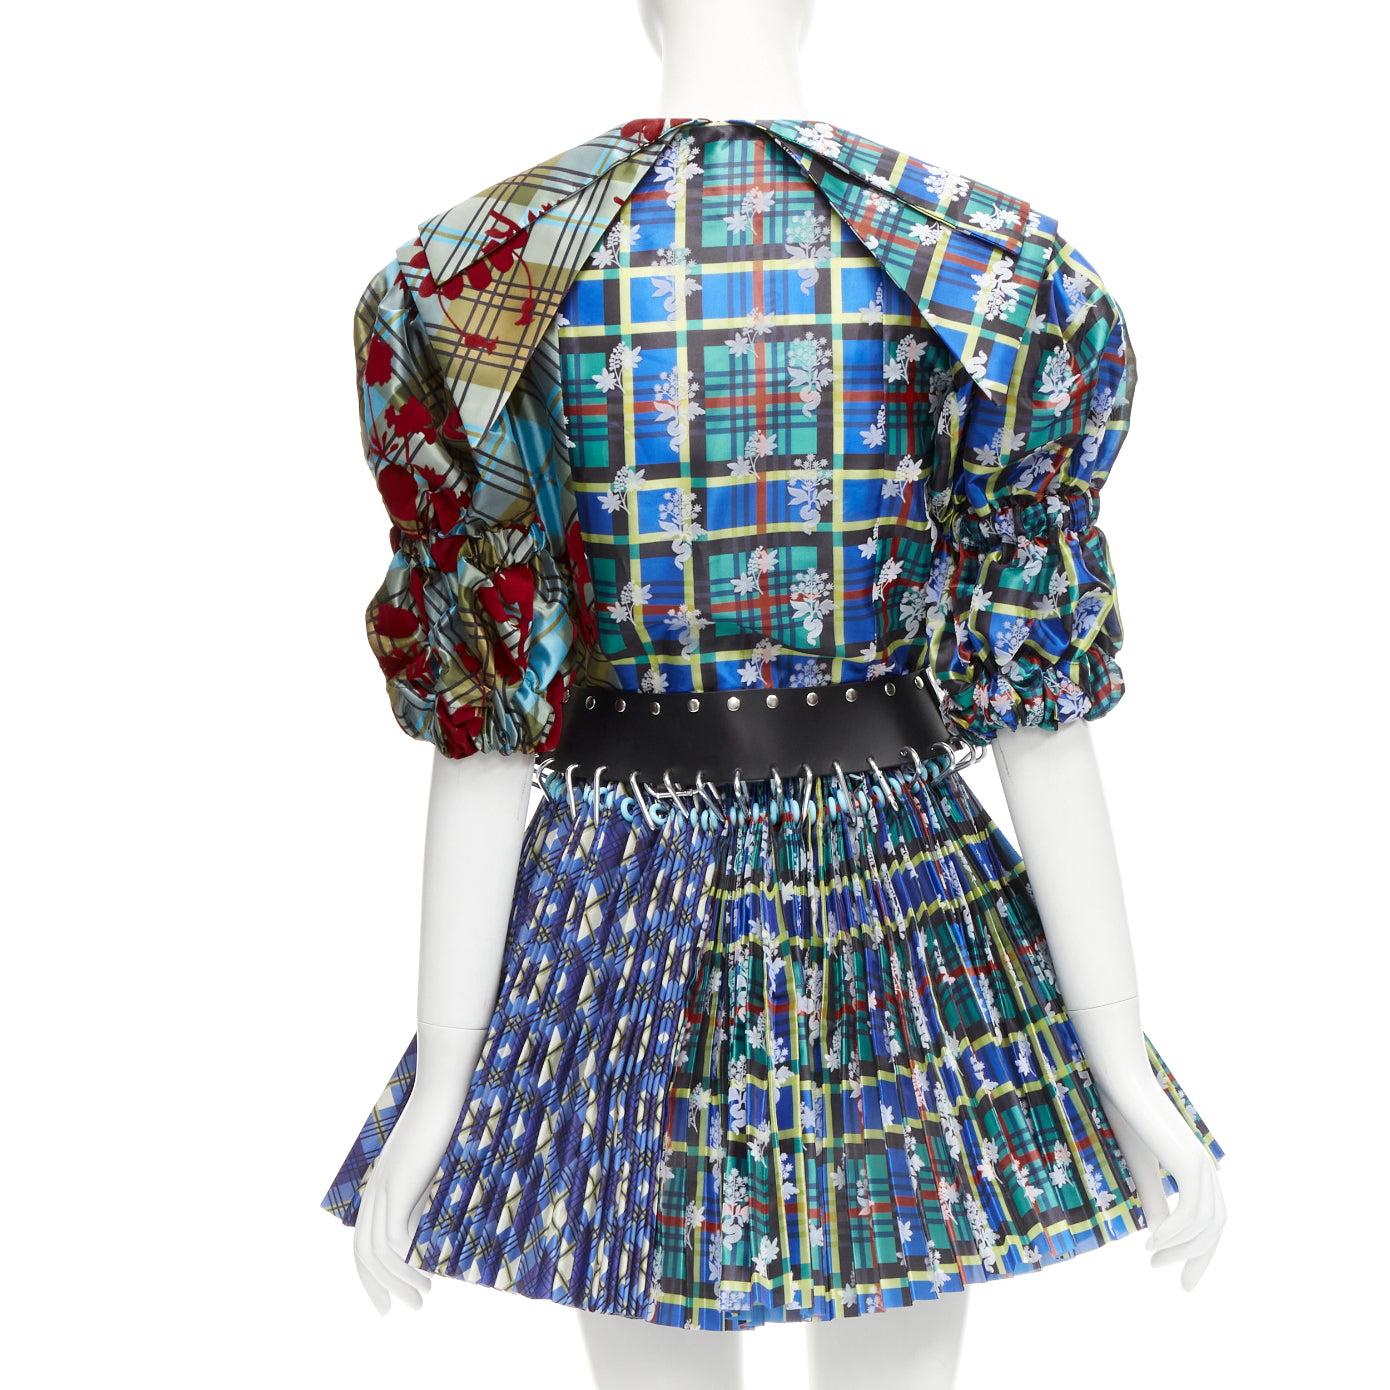 CHOPOVA LOWENA Punk blue plaid floral damask pleated eyelet skirt belted dress S 1